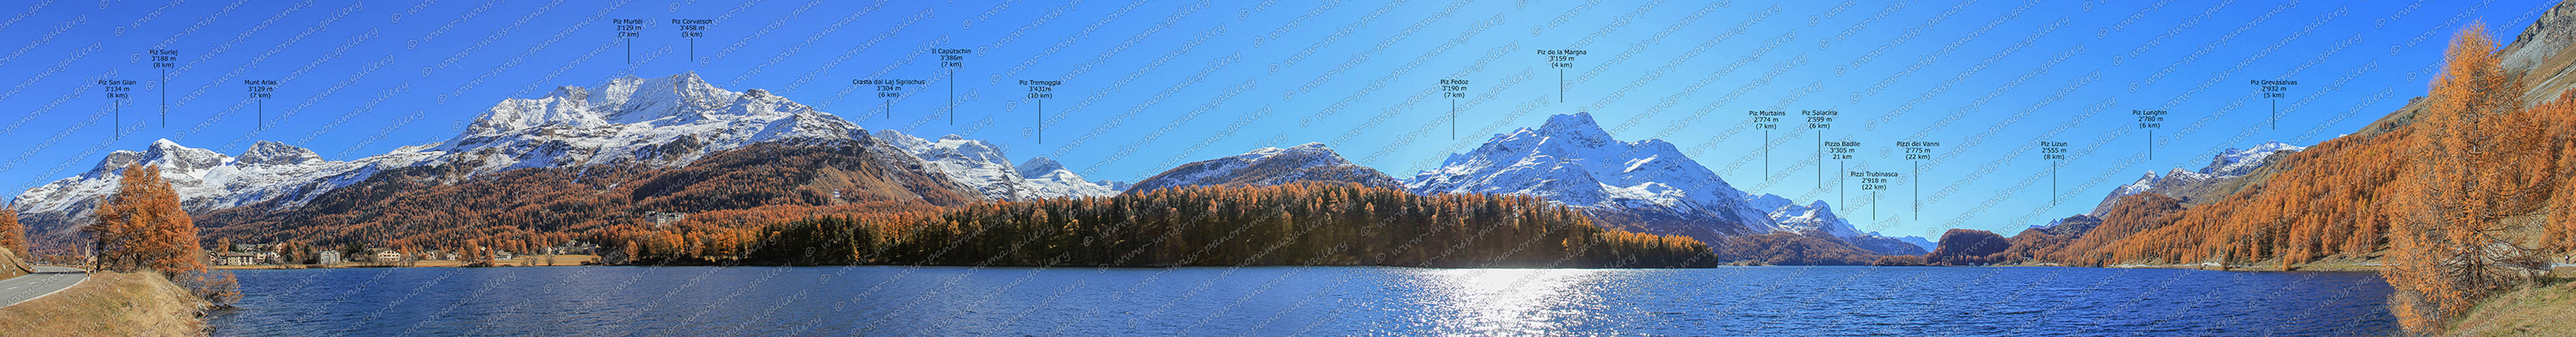 swiss panorama gallery Silsersee panorama  Bergpanorama Upper Engiadina Lakes Area Panorama, Schweizer Alpenpanorama, Pizzo Badile, Pizzo Trubinasca, Pizzo del Vanni, Piz Lizun, Piz Grevasalvas 2'932 m (5 km), Piz Lunghin  2'780 m (6 km), Piz Murtains, Piz Fedoz 3'190 m (7 km), Piz Salacine 2'599 m (6 km), Piz de la Margna 3'159 m 4 km), Crasta dal Laj Sgrischus, Piz Tremoggia 3431m, Il Capütschin 3386m, Piz Corvatsch 3'458 m (5 km), Piz Mortel 3'129 m (7 km), Munt Arlas 3'129 m (7 km), Piz San Gian 3'134 m (8 km), Piz Surlej 3’188 m (8 km)